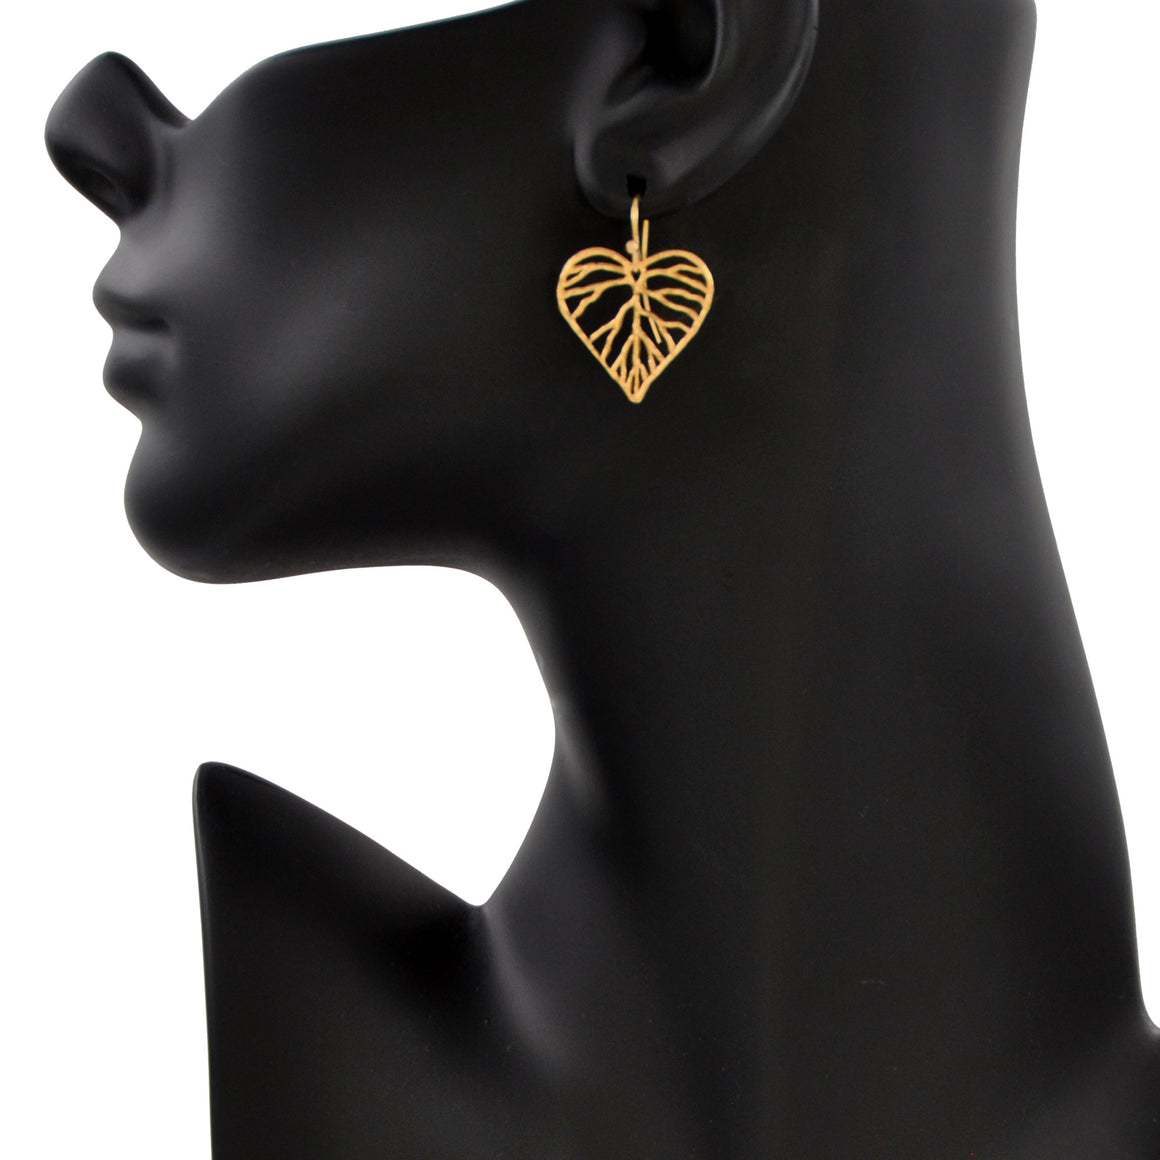 Heart Leaf Earrings (Petite) - 24K Gold Plated